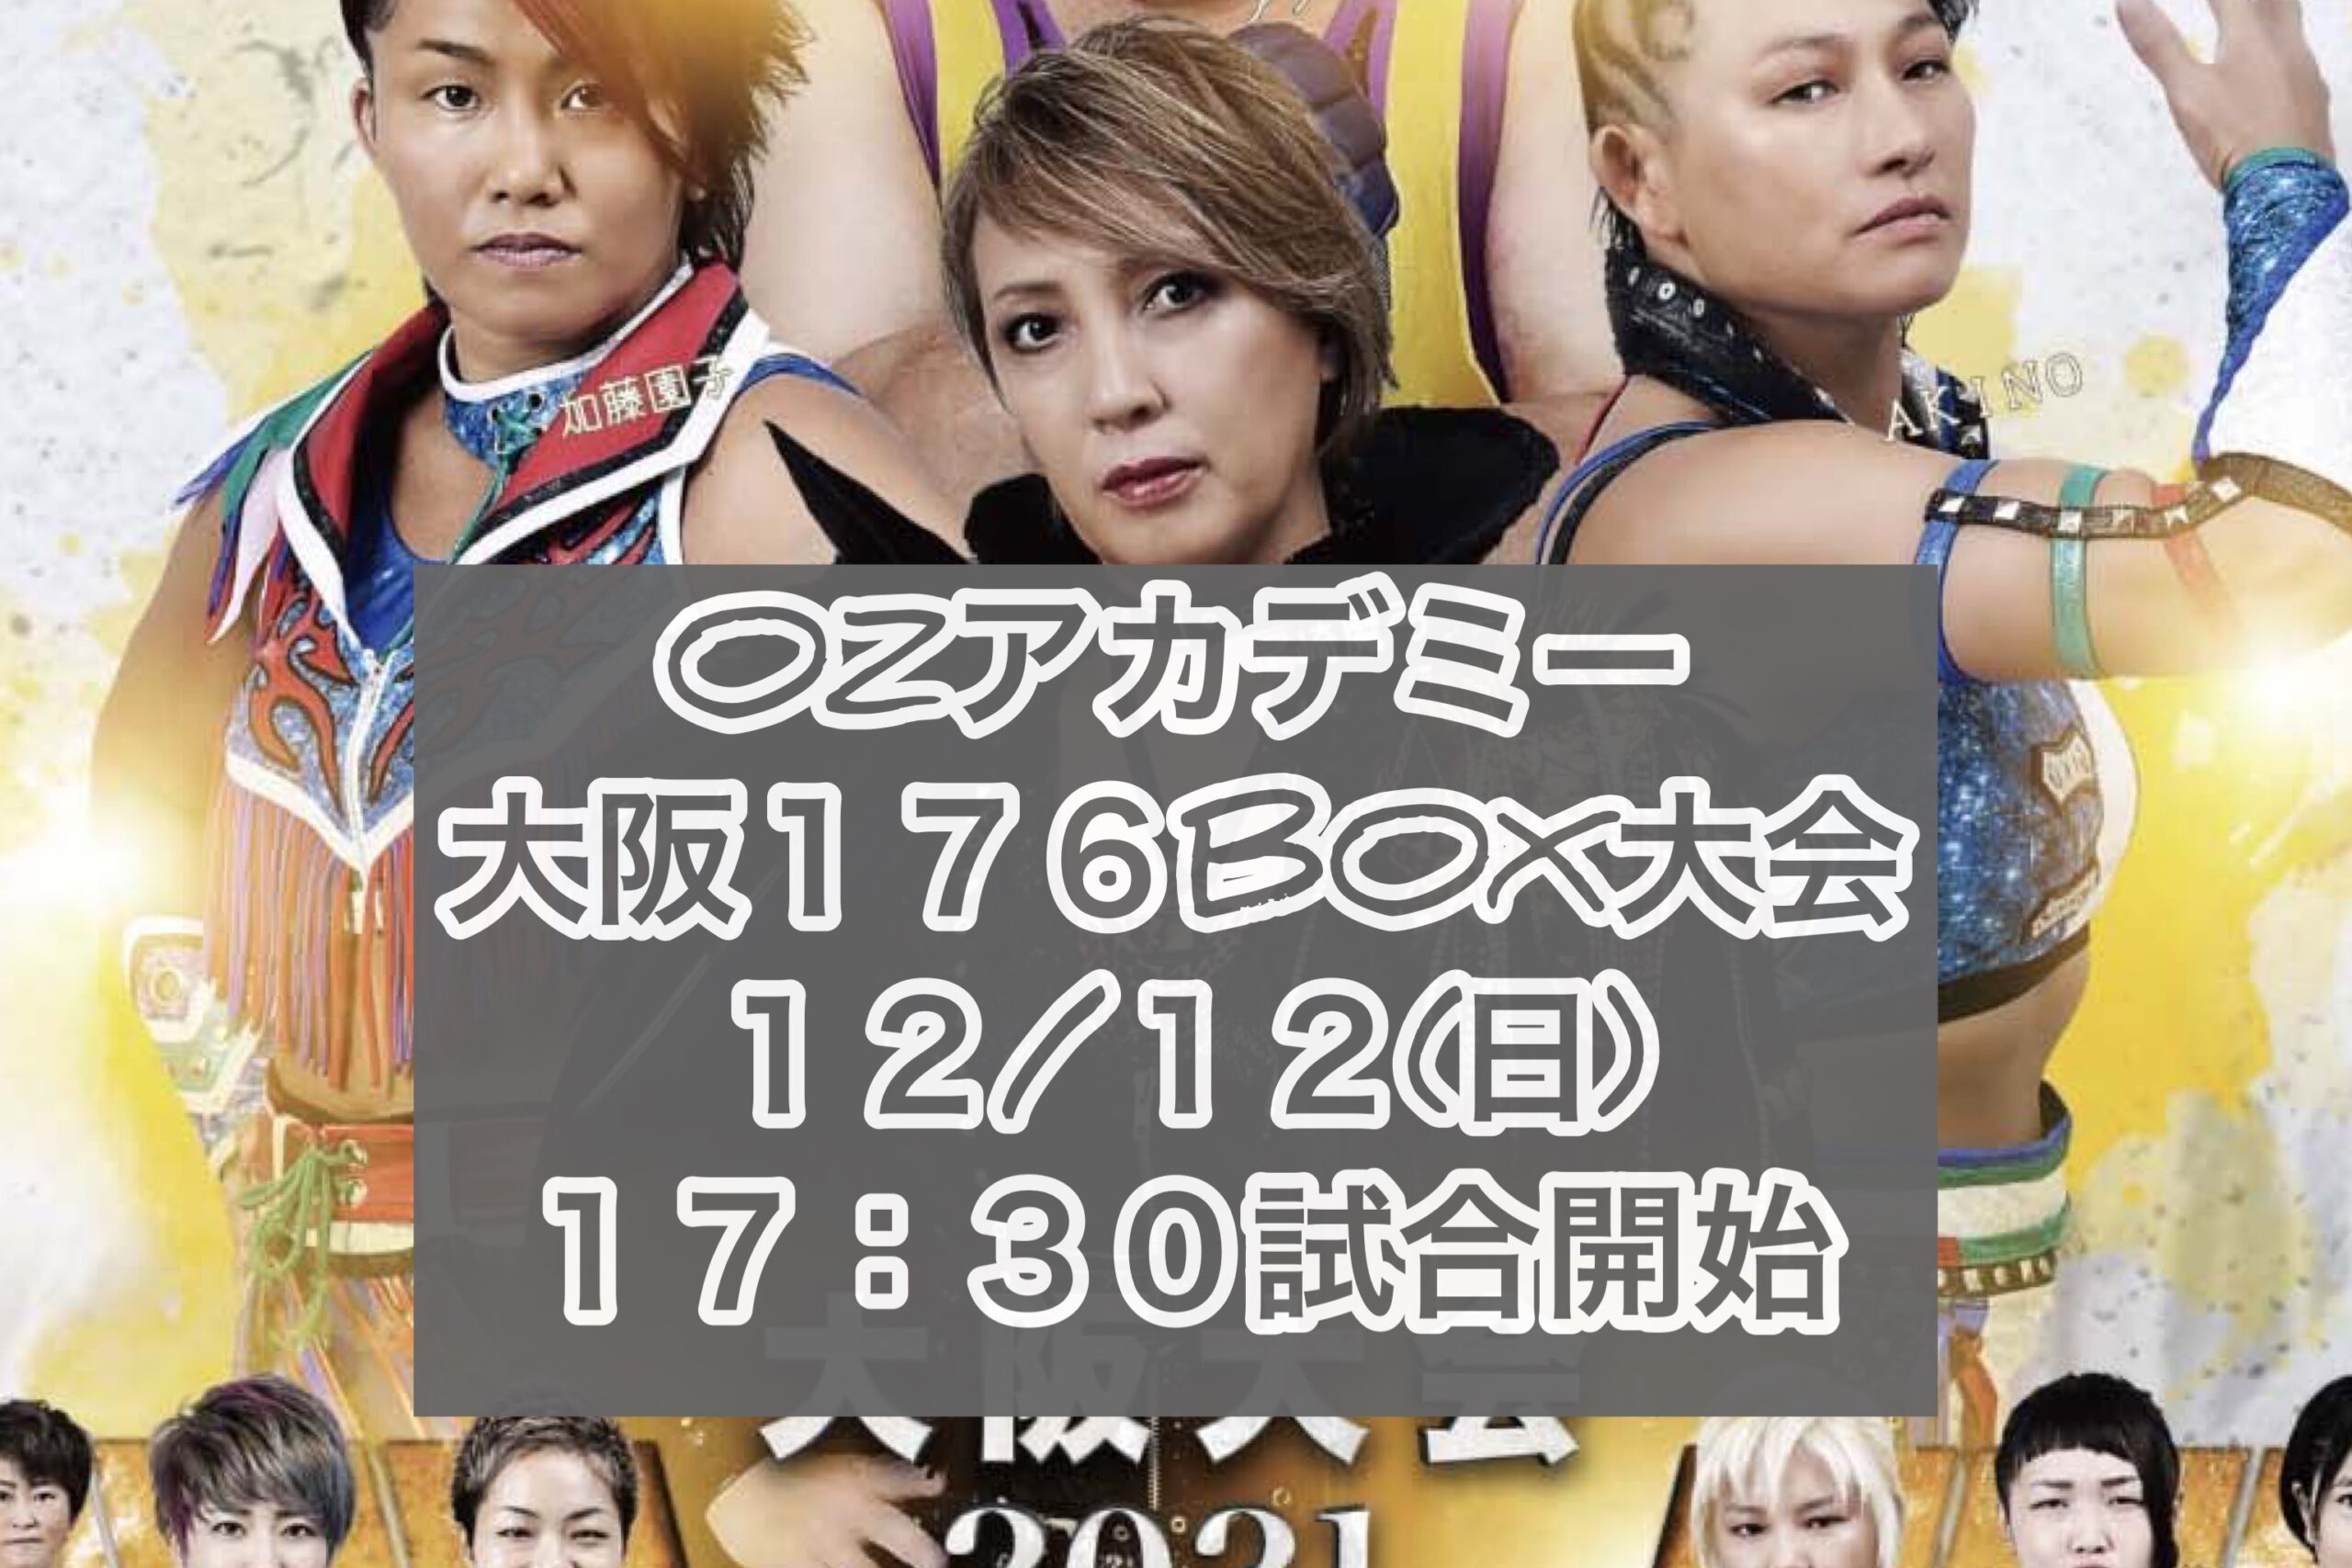 OZアカデミー女子プロレス20211212大阪大会ポスター写真